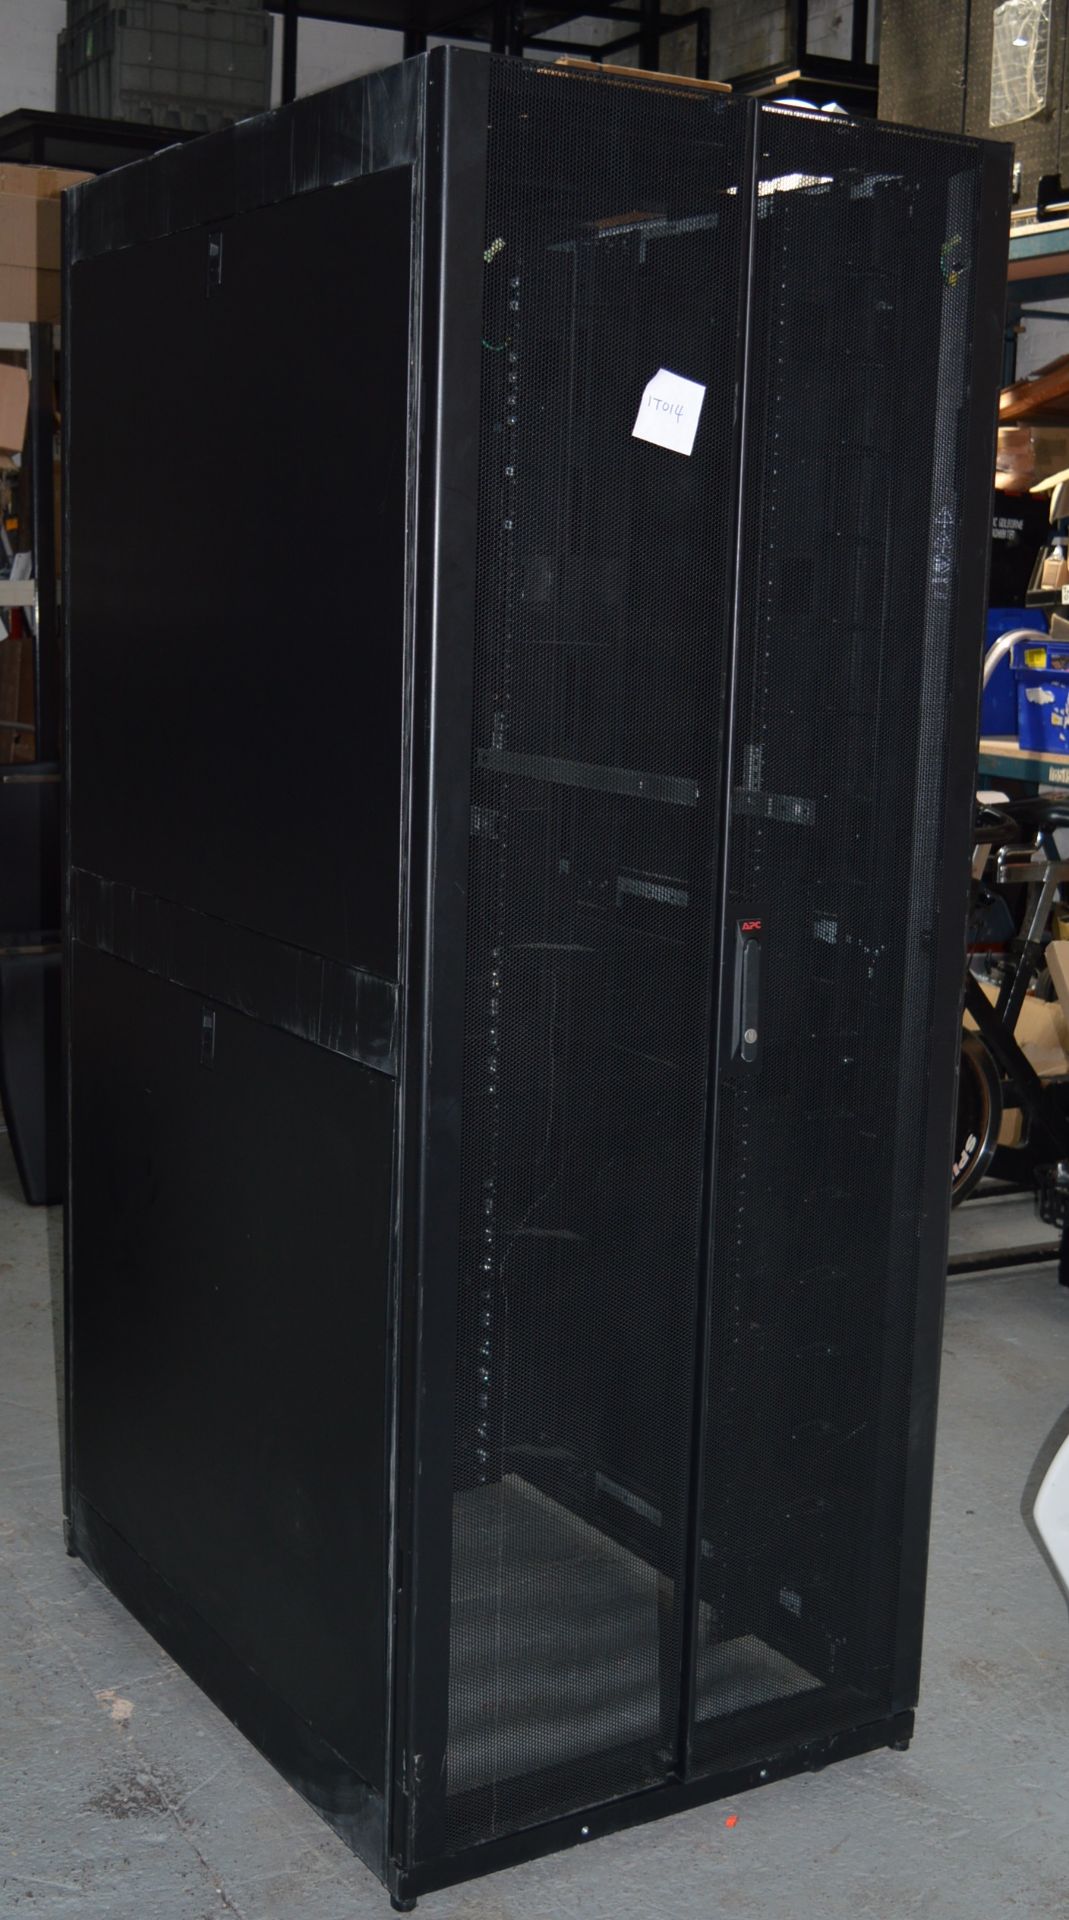 1 x APC Netshelter 42U Server Enclosure - AR3100 Black - Suitable For 19 Inch Compliant